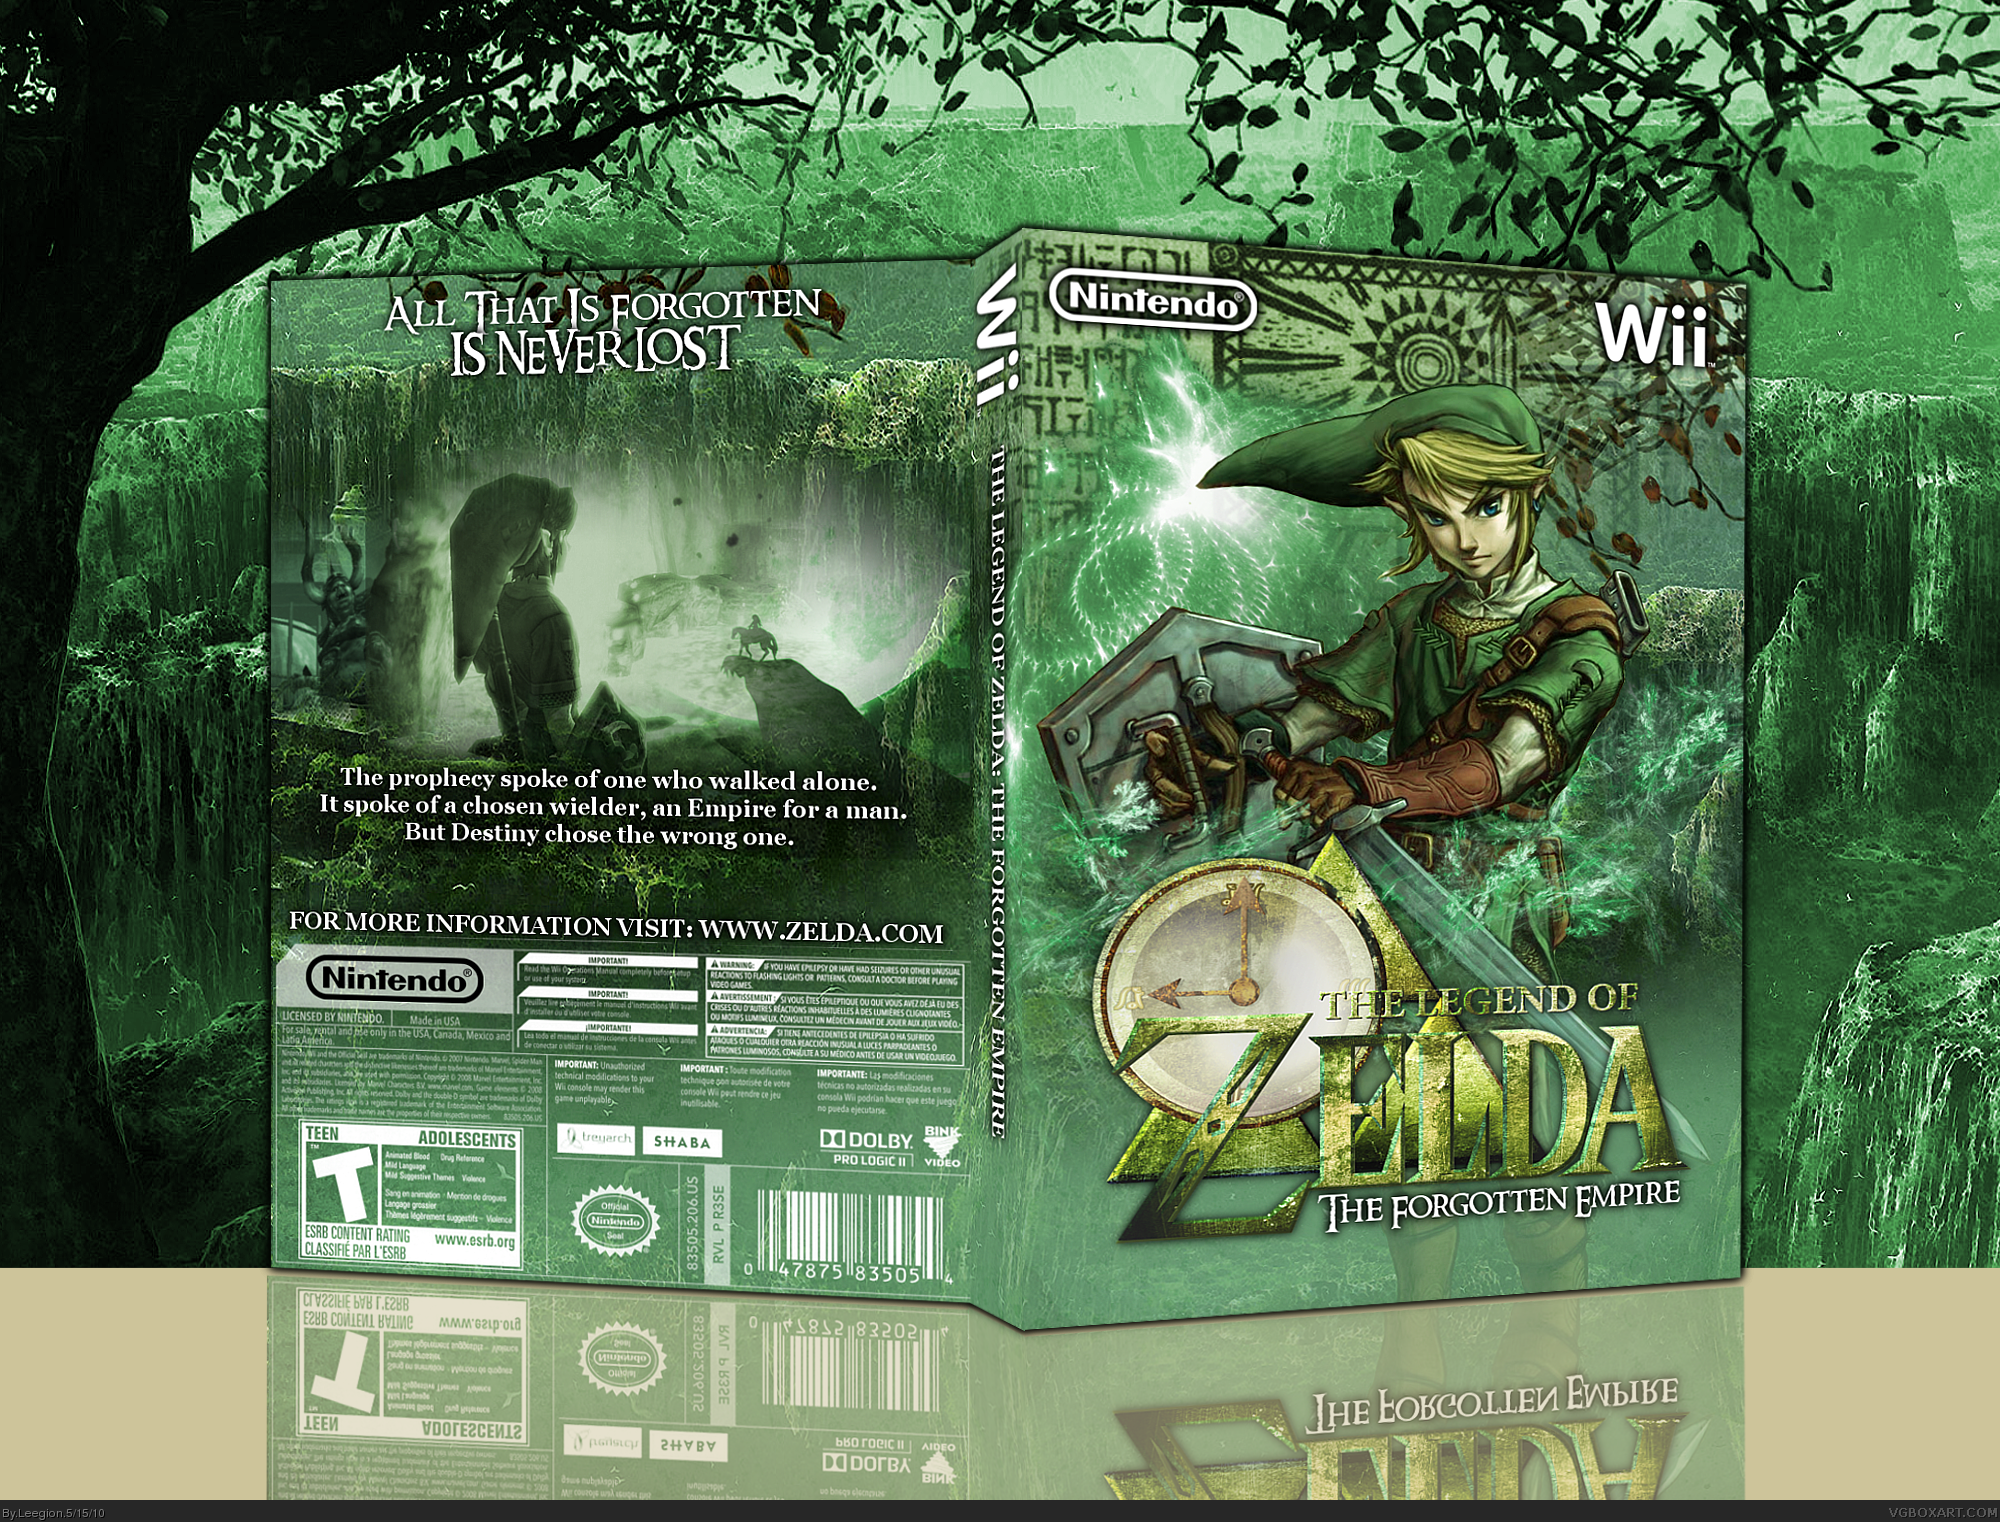 The Legend Of Zelda: The Forgotten Empire box cover